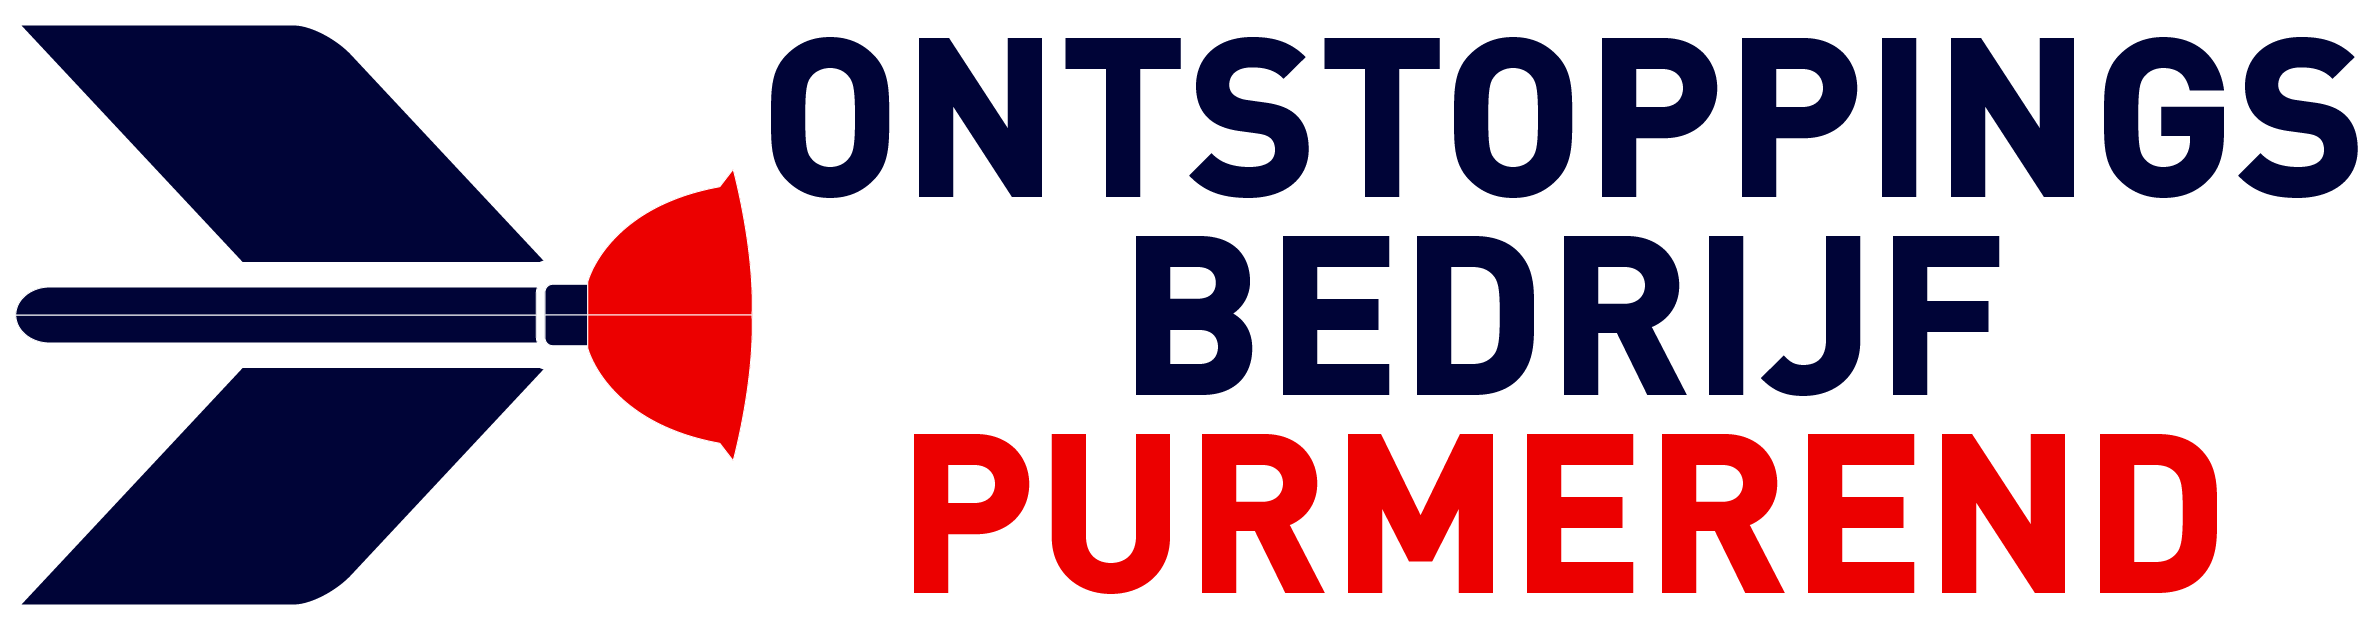 Ontstoppingsbedrijf Purmerend logo